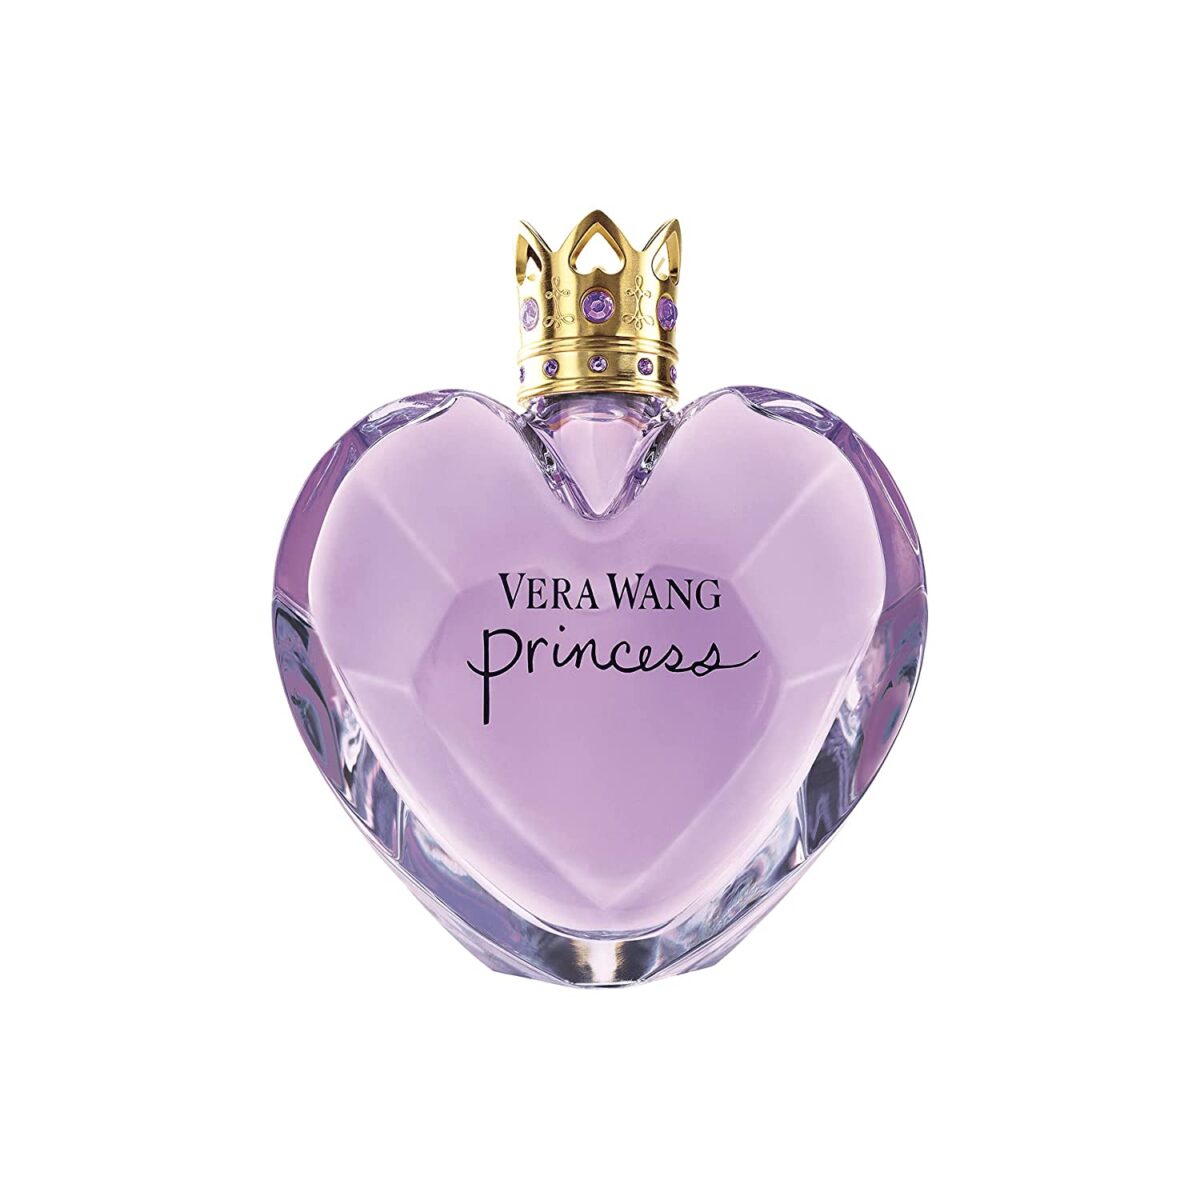 A bottle of Vera Wang Princess perfume for women | The Dating Divas